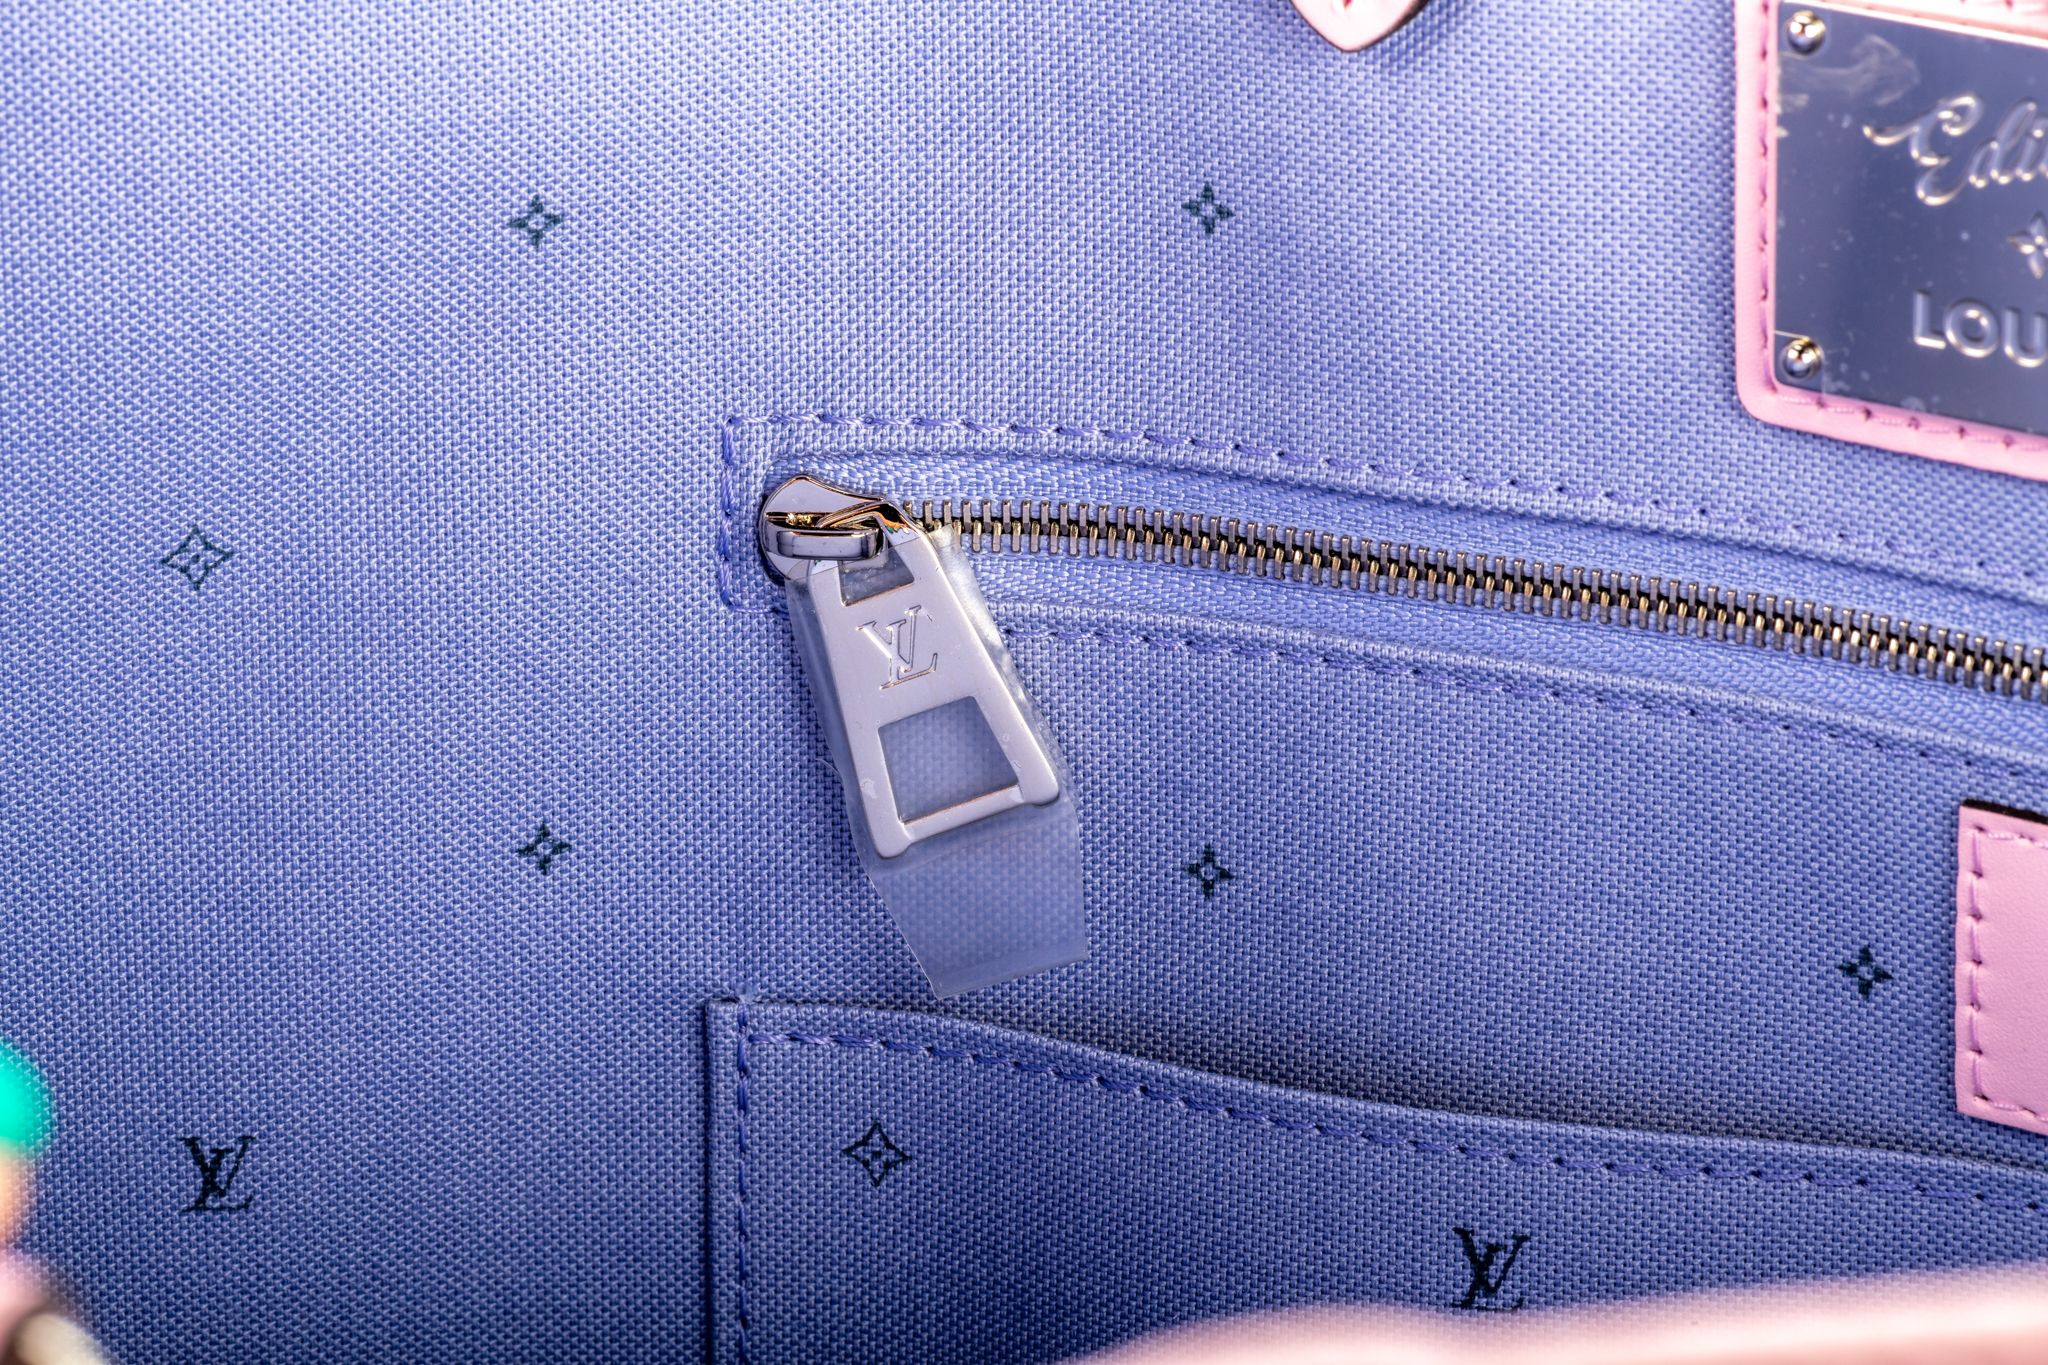 New in Box Louis Vuitton Portofino On The Go Limited Edition Bag